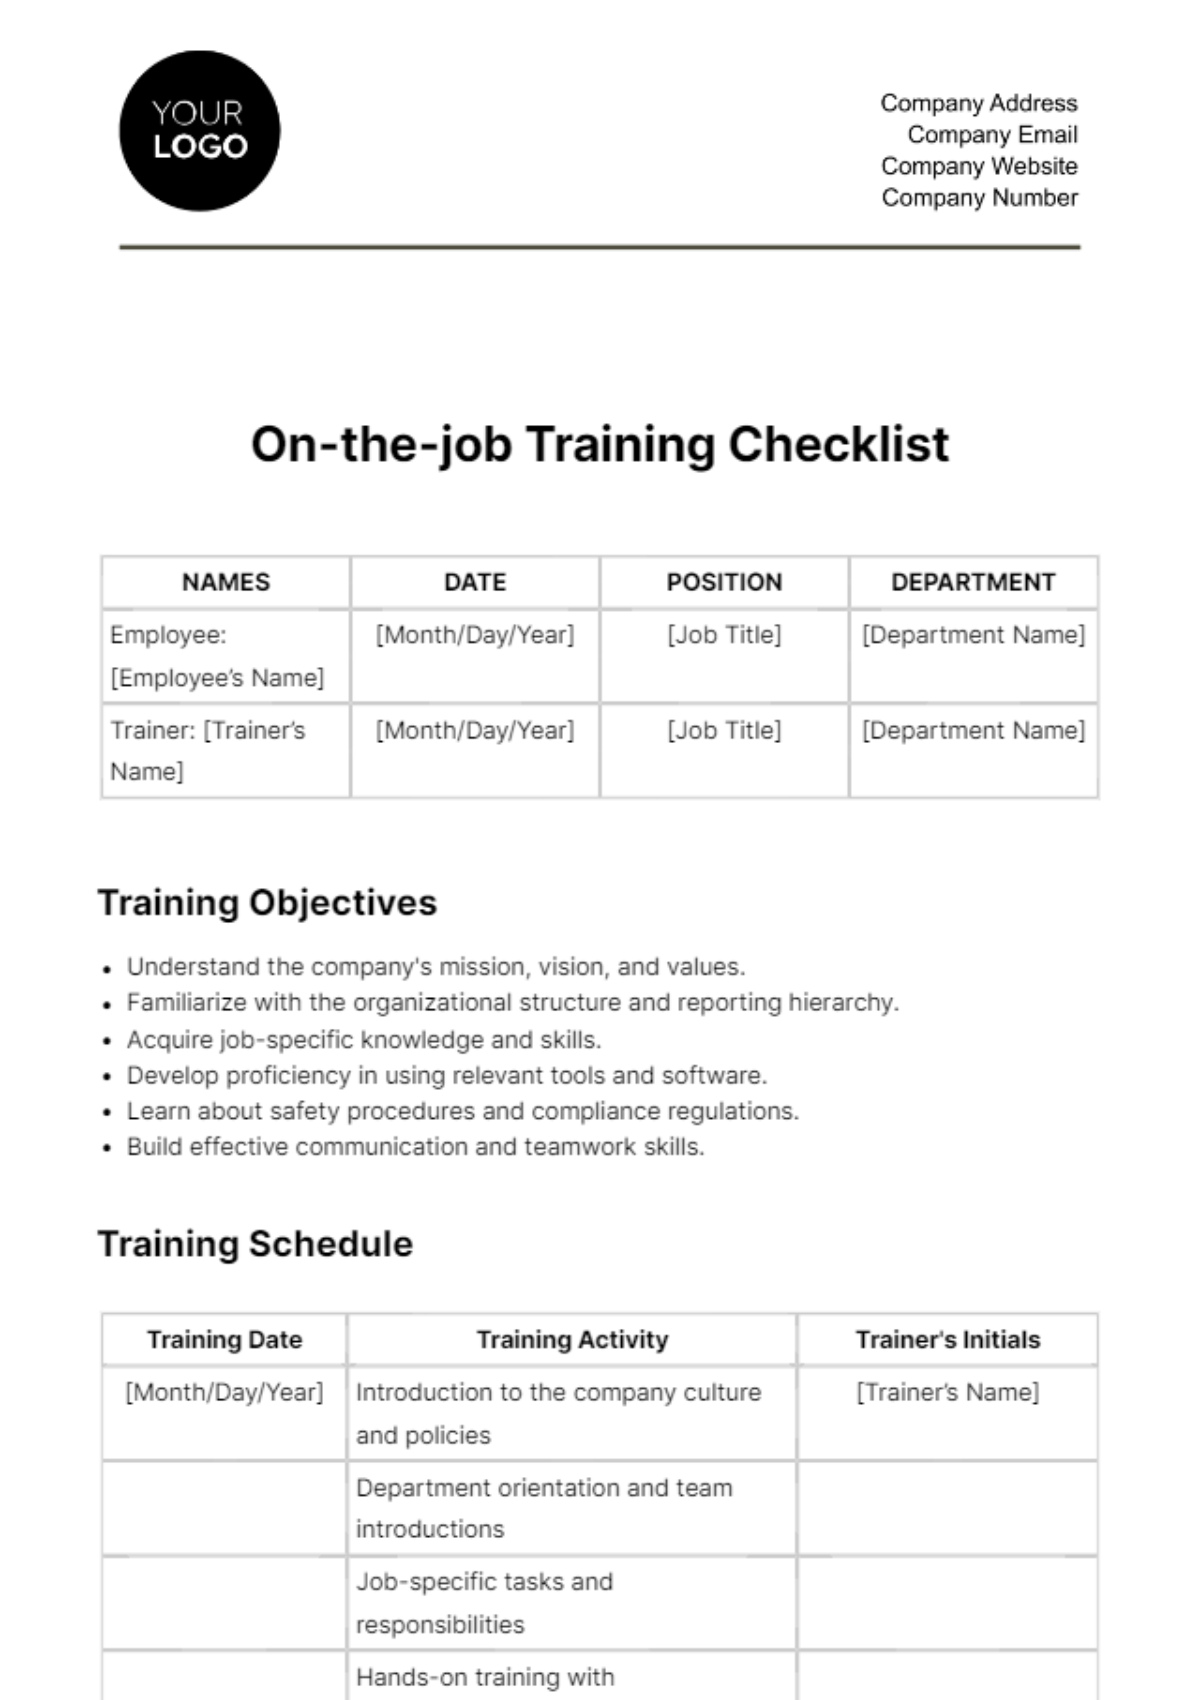 On-the-job Training Checklist HR Template